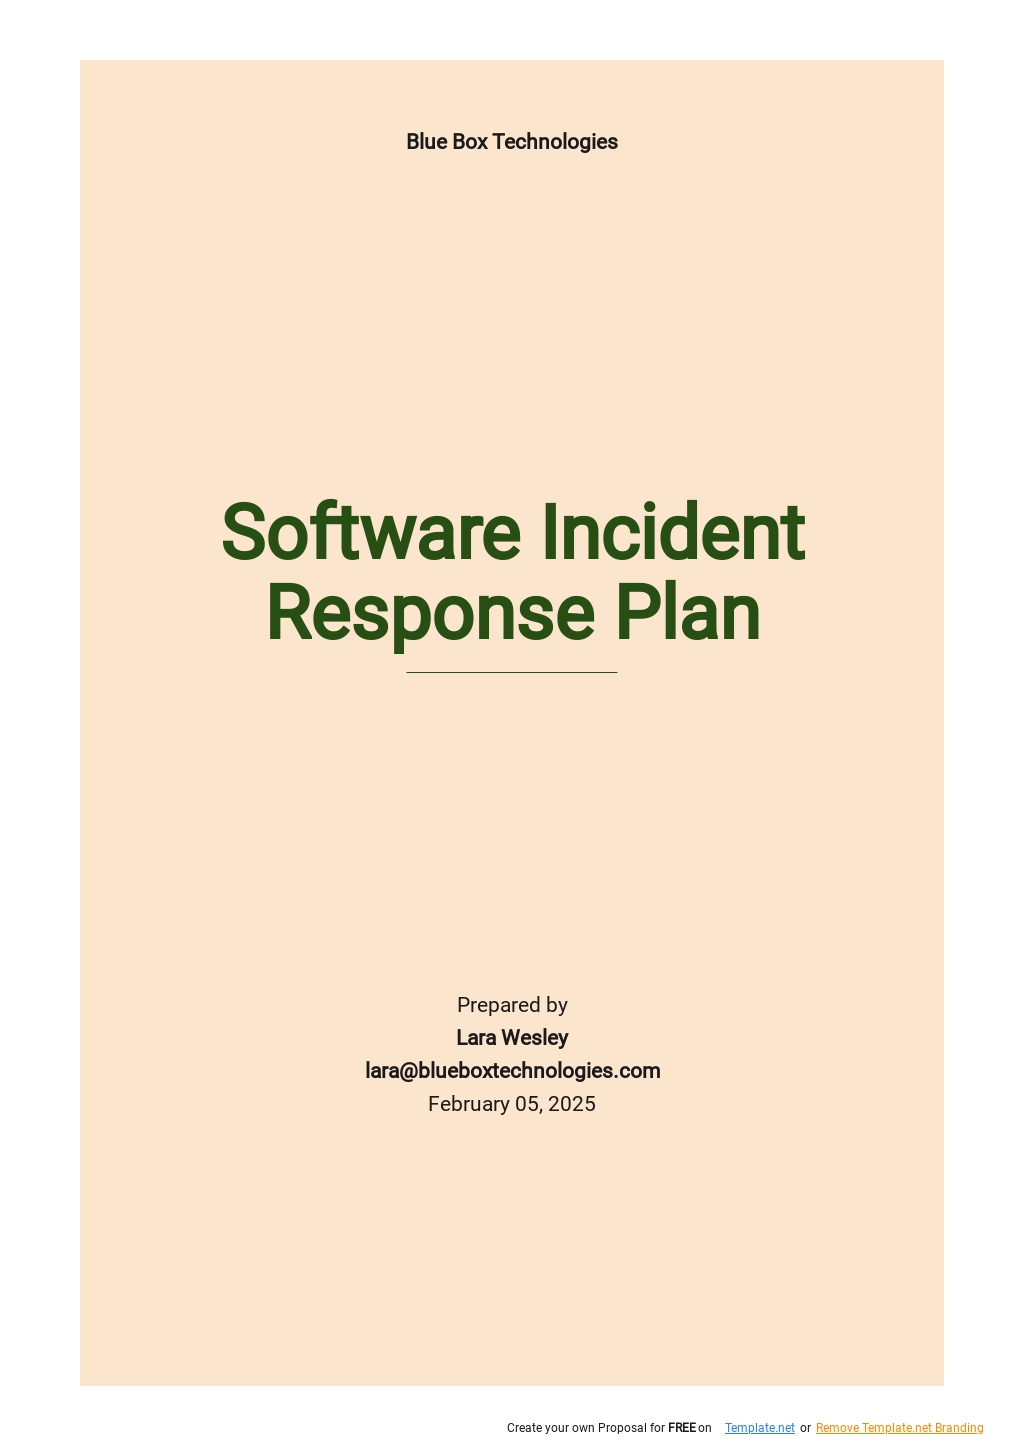 Software Incident Response Plan Template.jpe